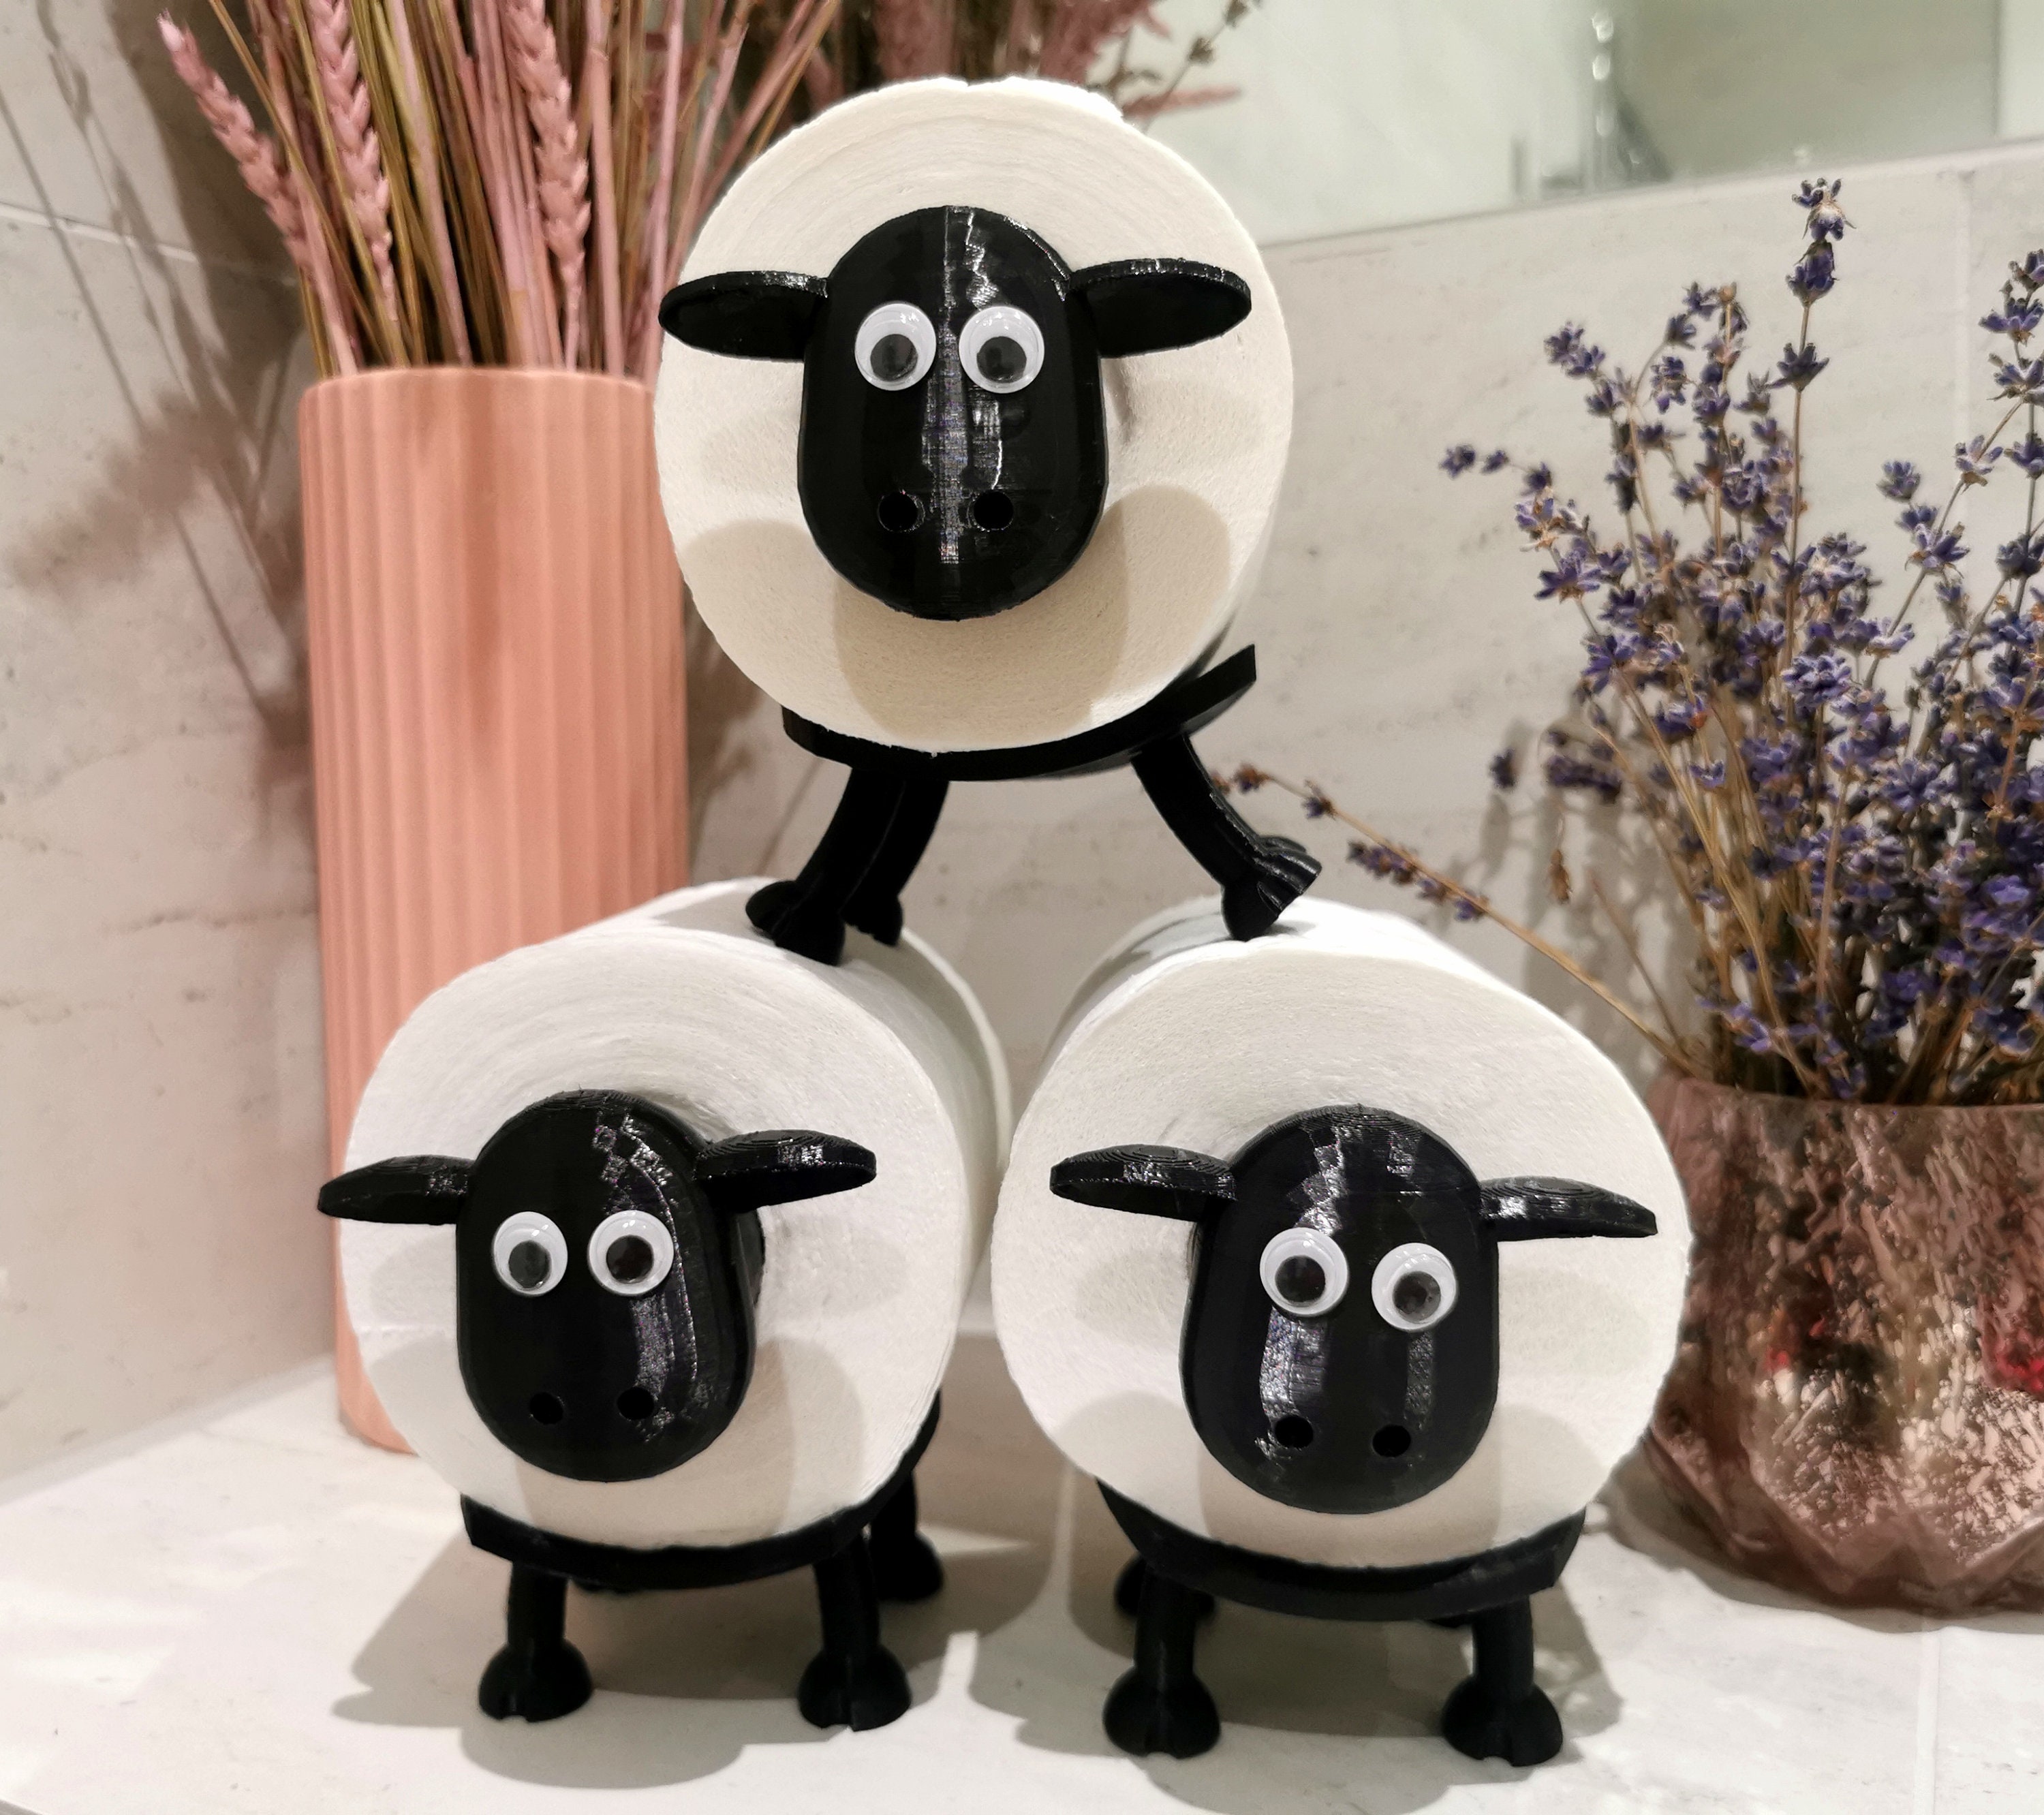 New Novelty Toilet Roll Holder Free Standing Black Sheep Bathroom Tissue  Storage